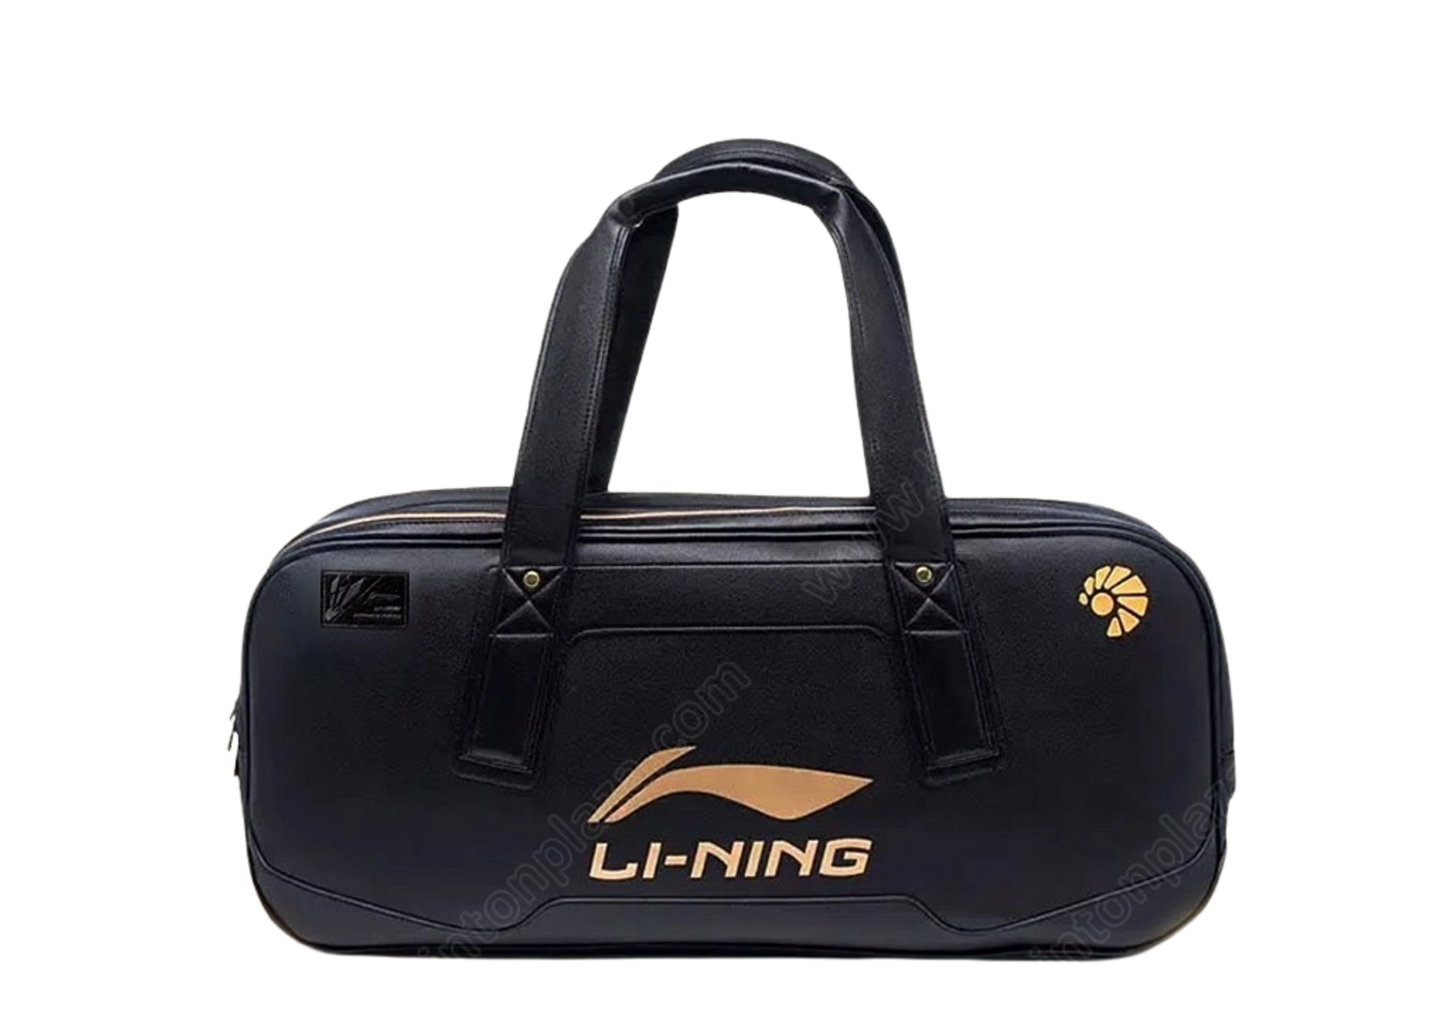 LI-NING PROFESSIONAL 6 IN 1 RACQUET BAG BLACK/GOLD ABJT005-1